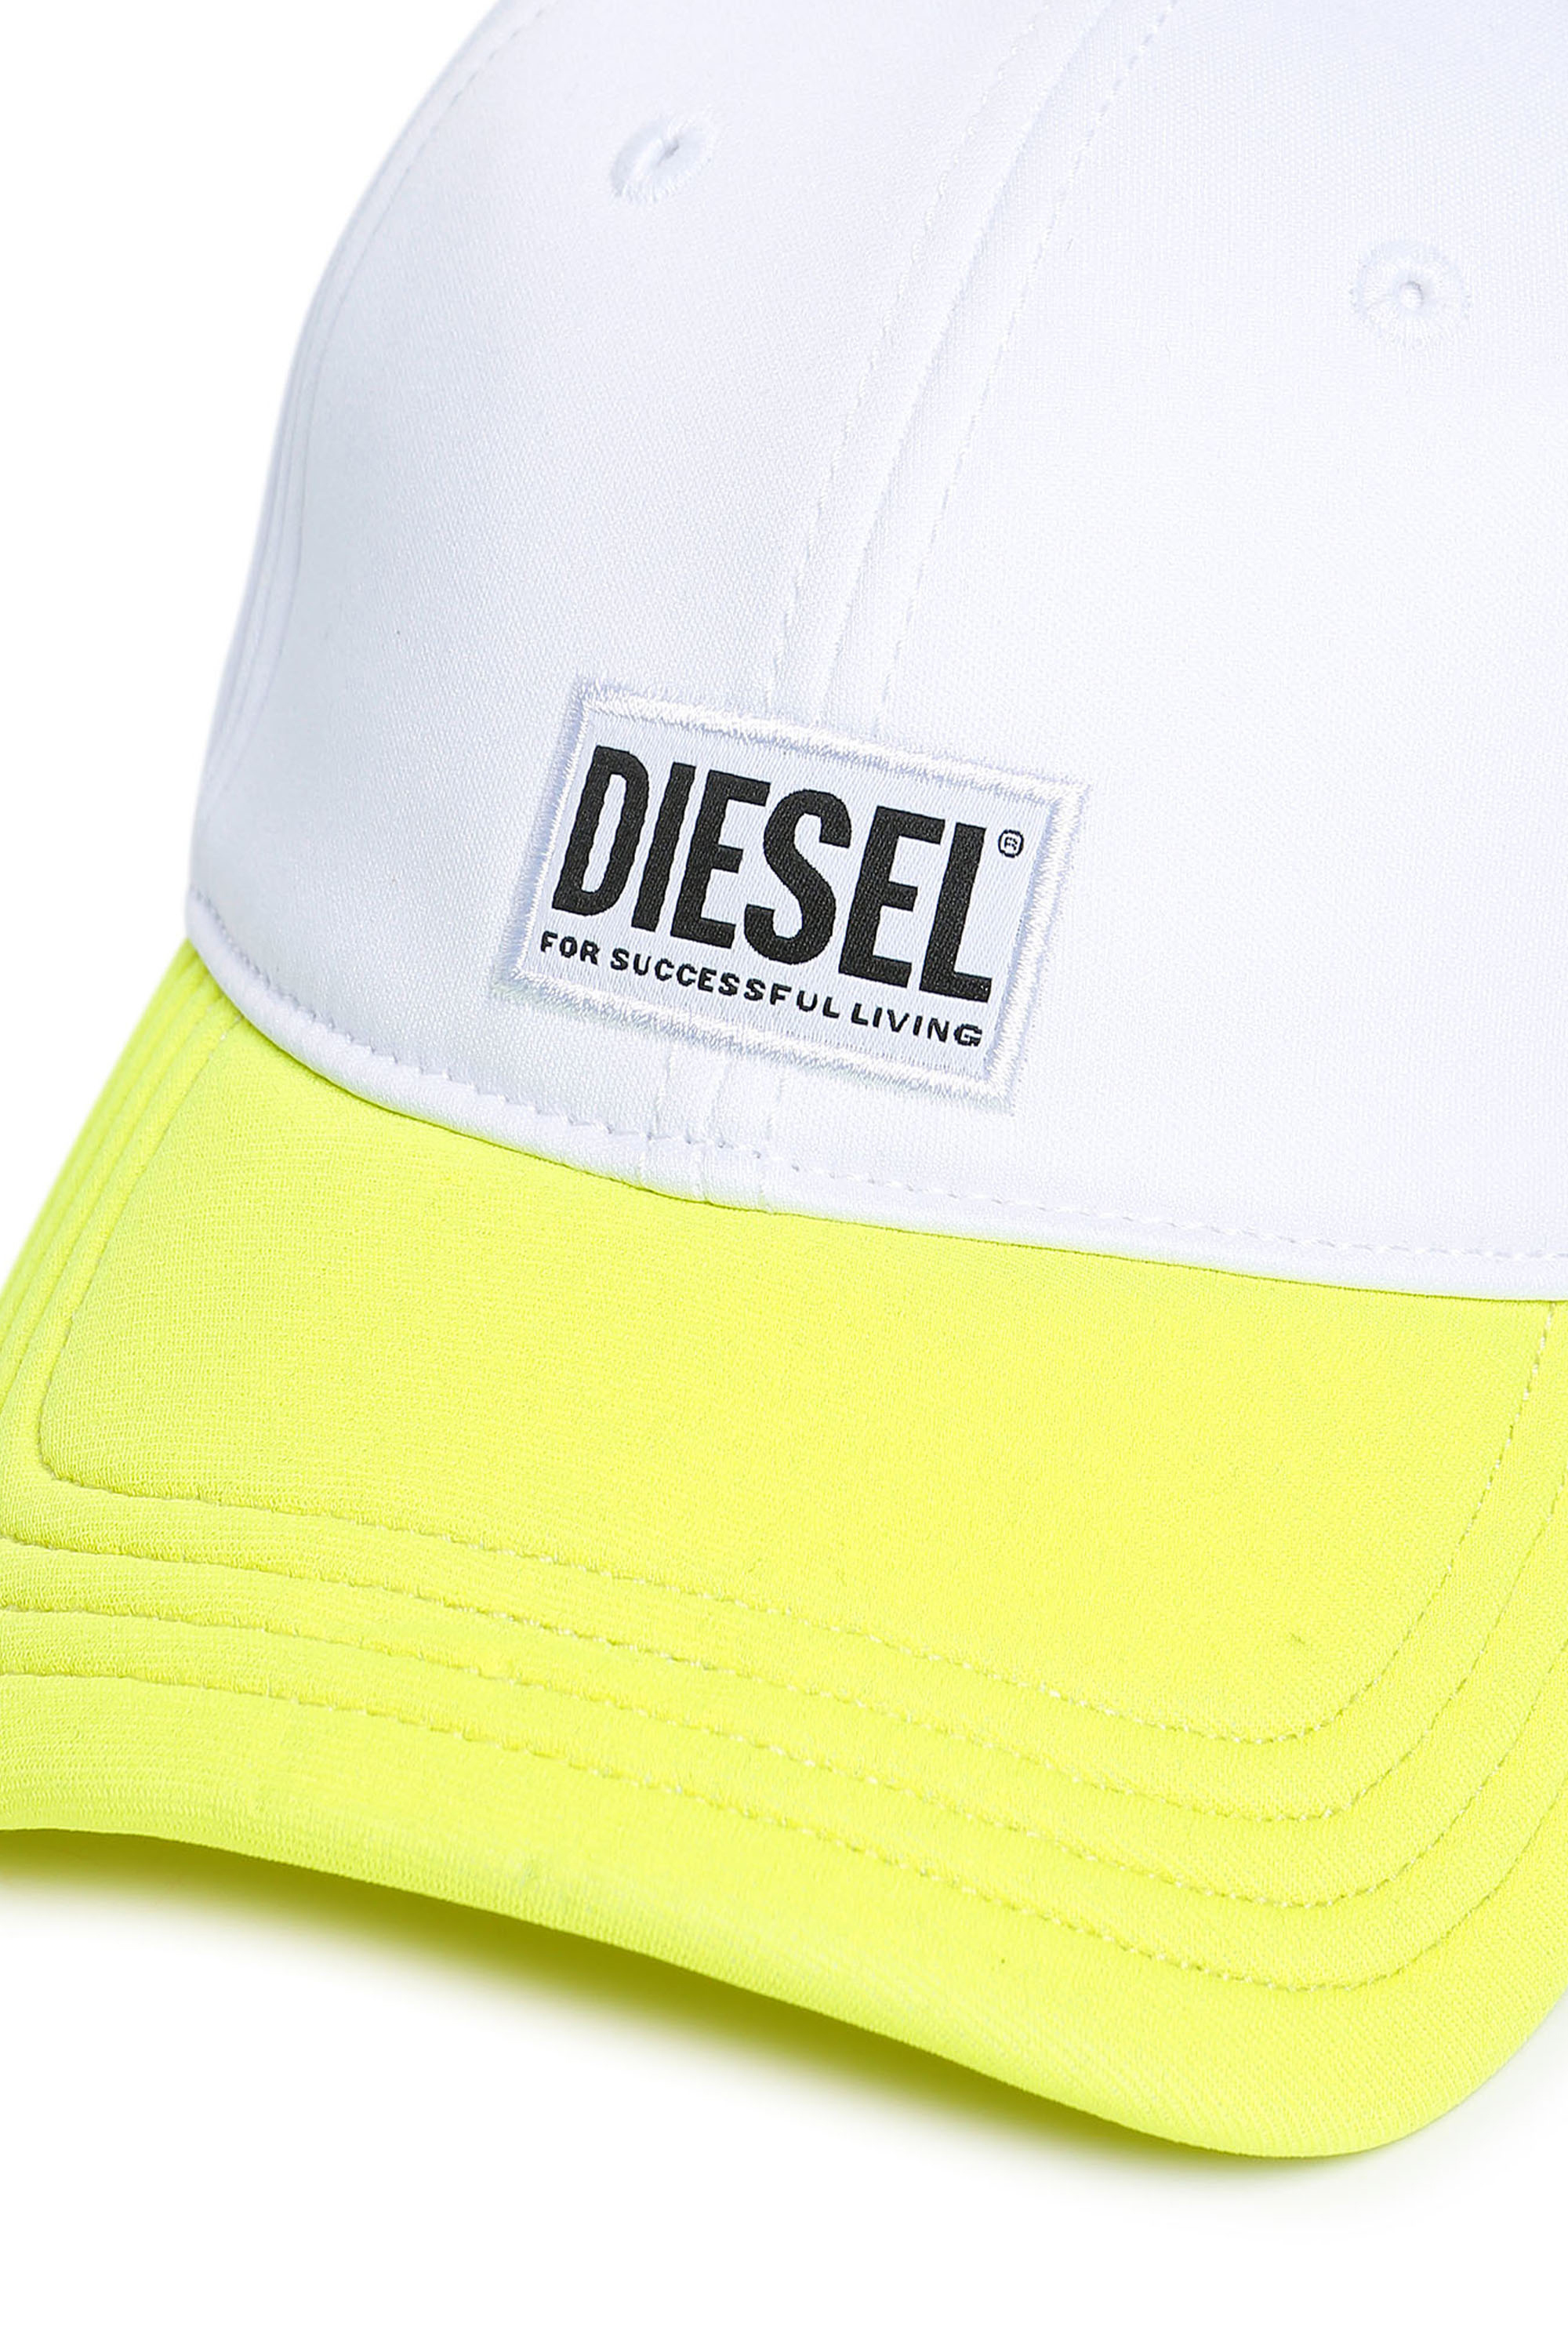 Diesel - FDURBO, Bianco/Giallo - Image 3